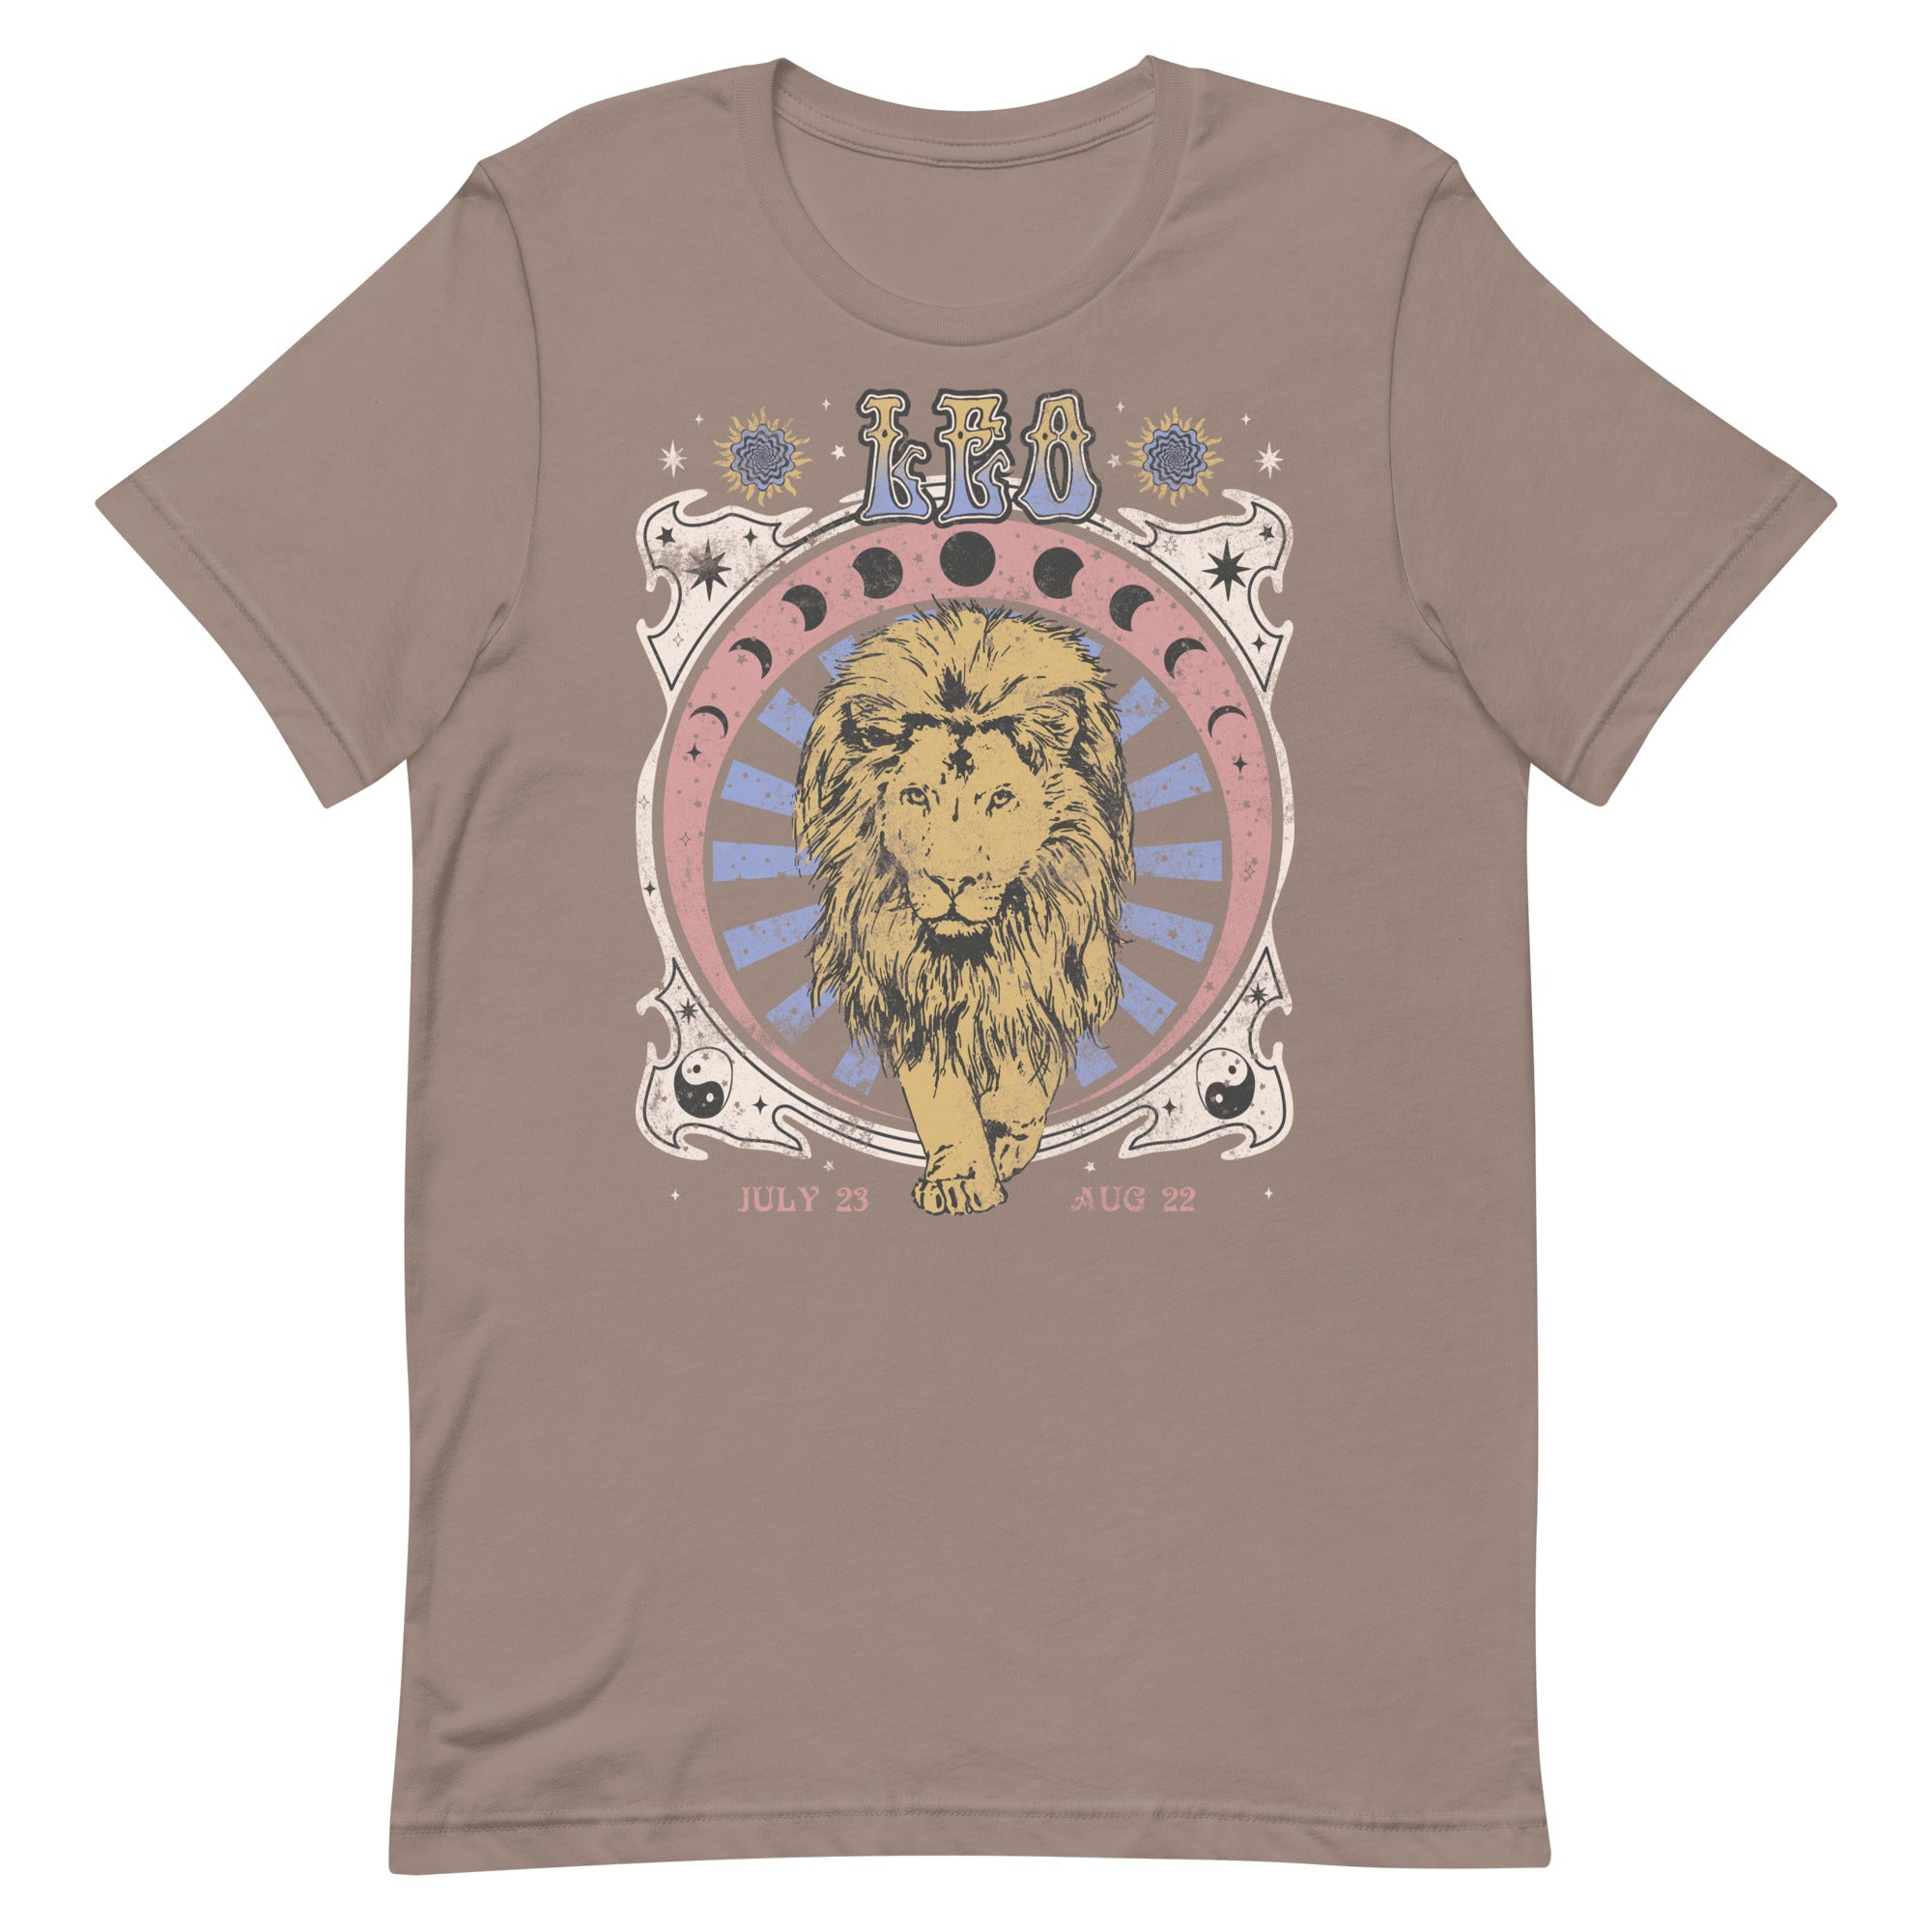 Leo Band T-Shirt Inspired Graphic Tee